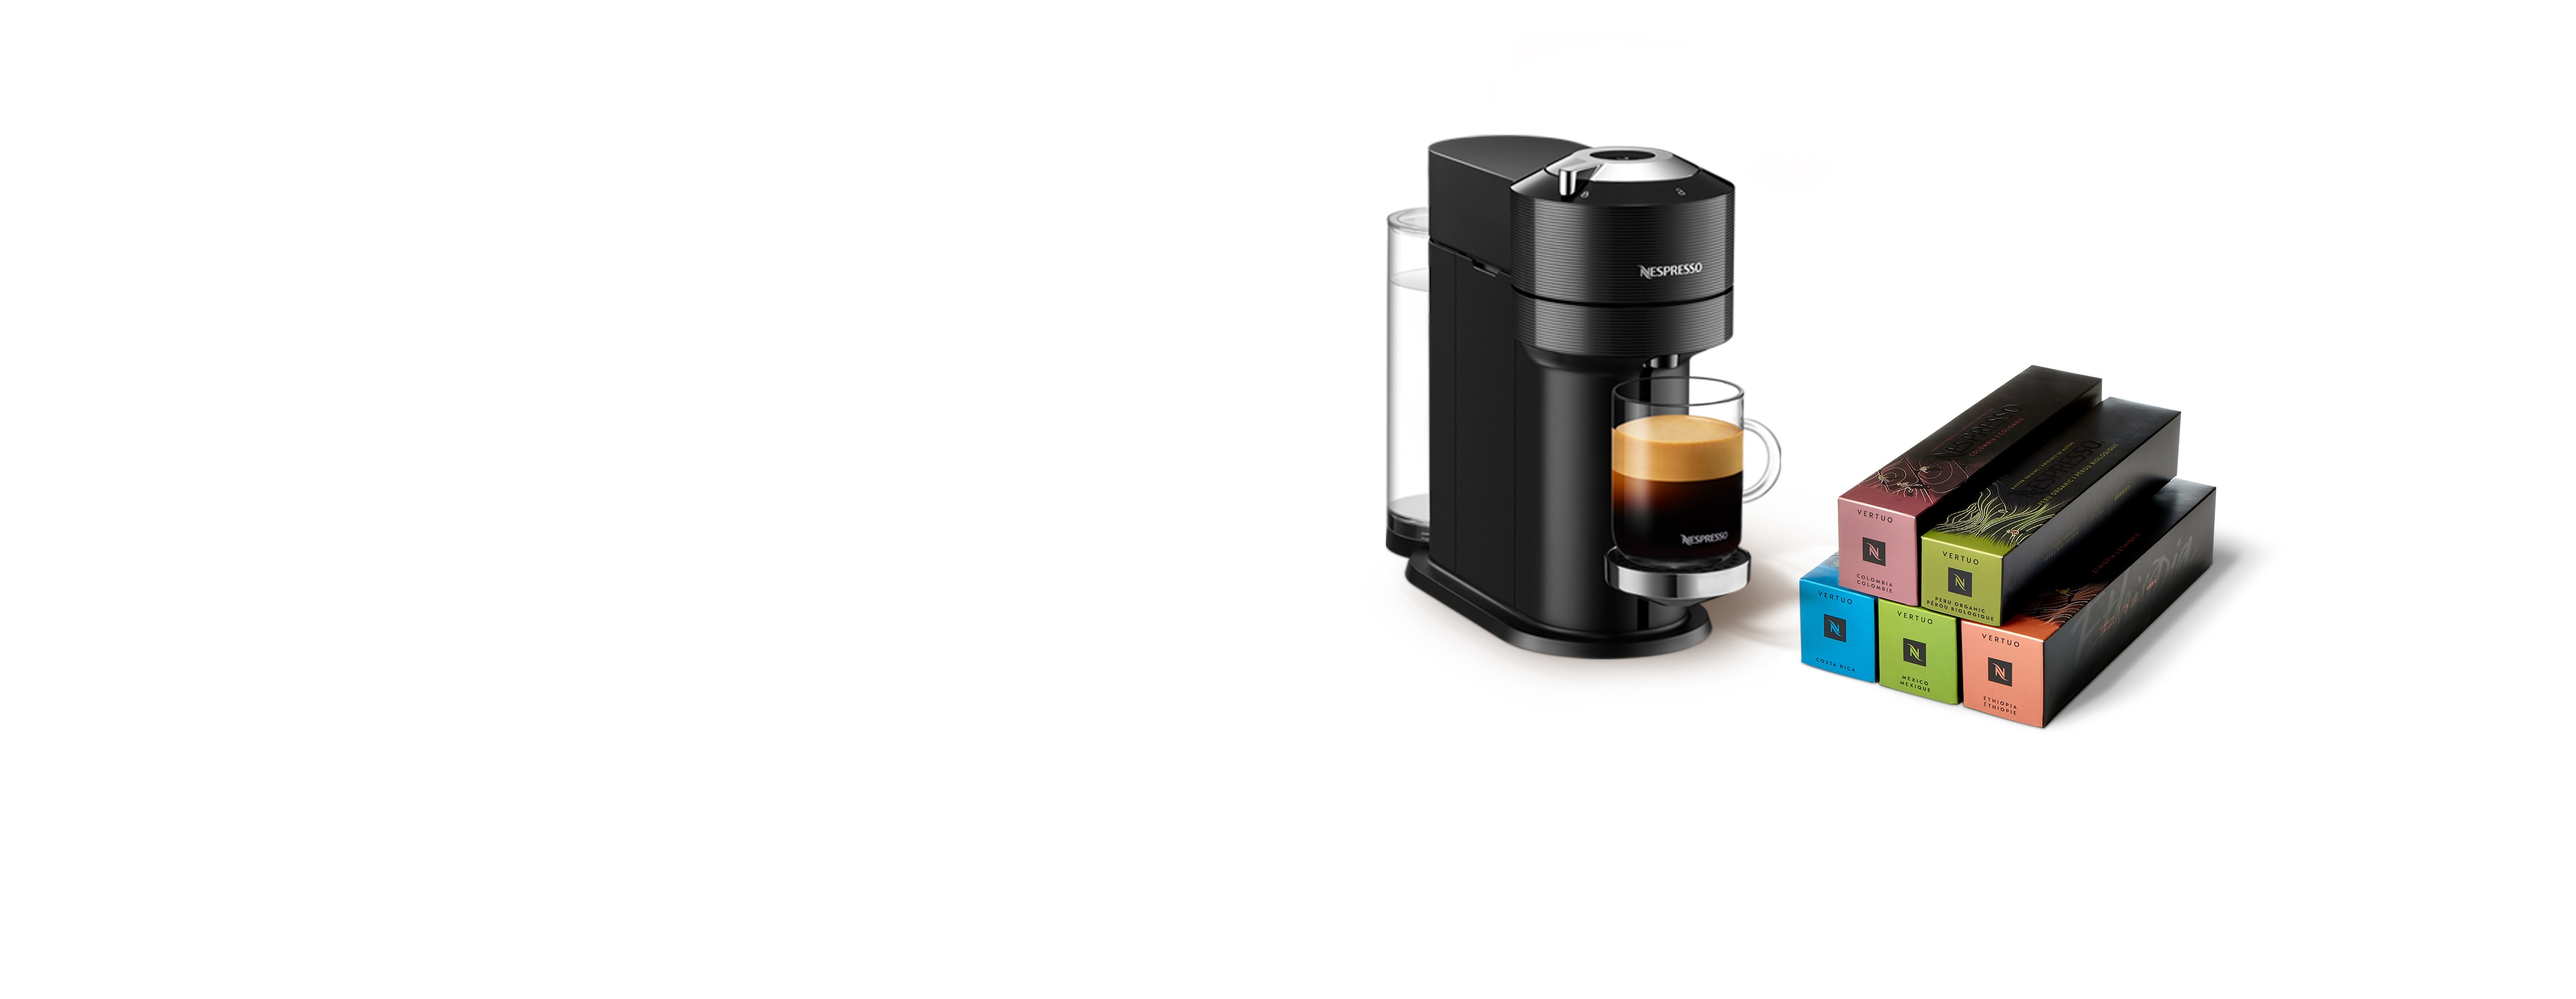 Vertuo Next Premium black with Master Origins coffee pack